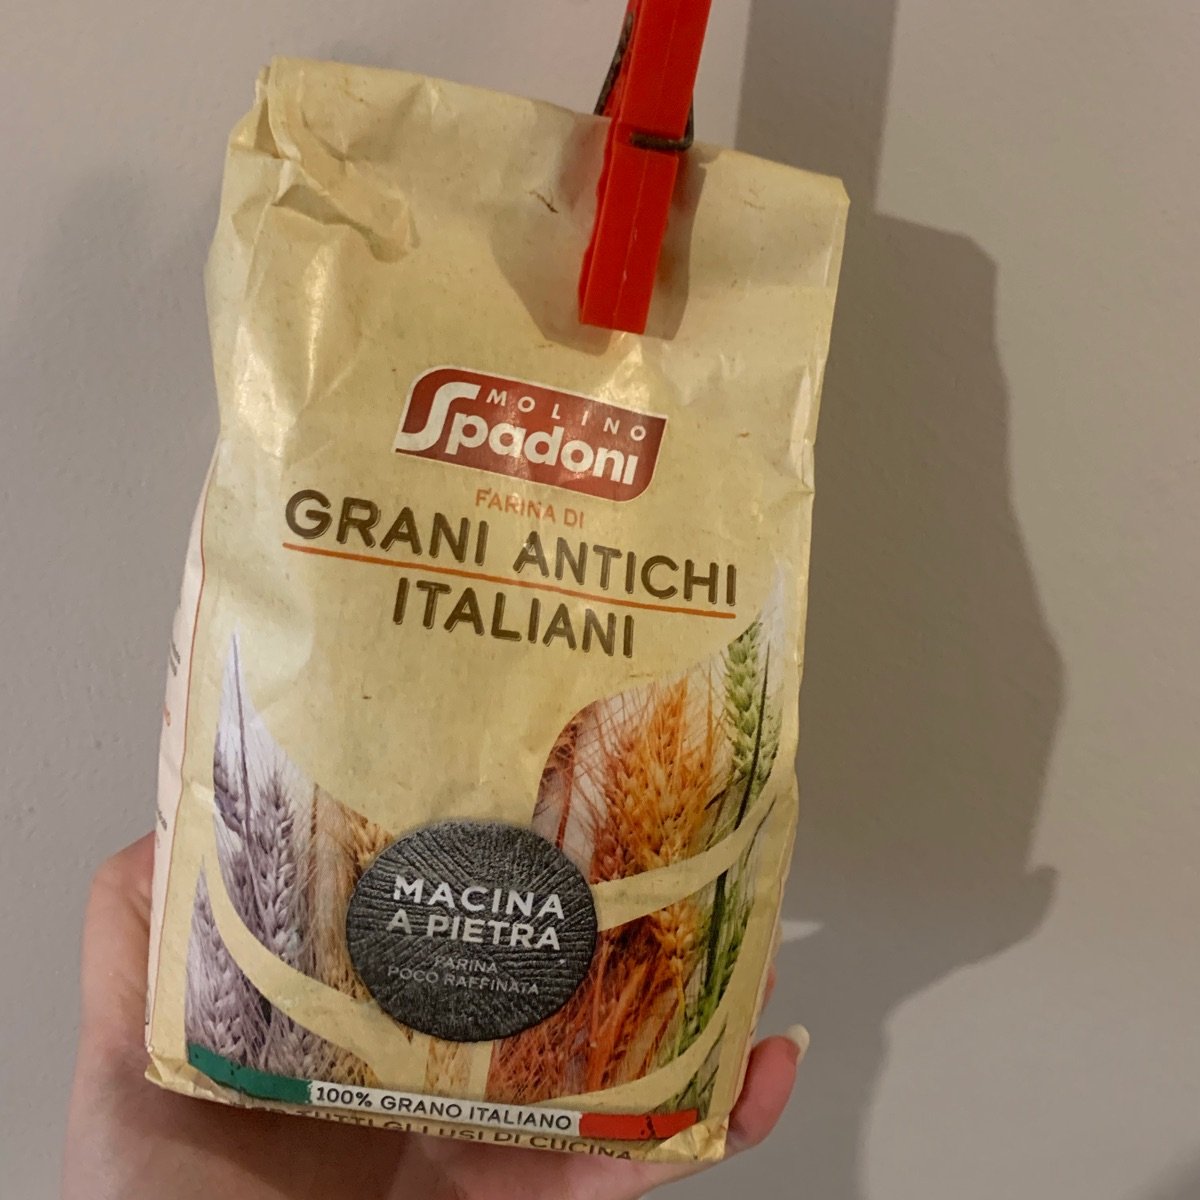 Molino Spadoni Grani antichi italiani Reviews | abillion